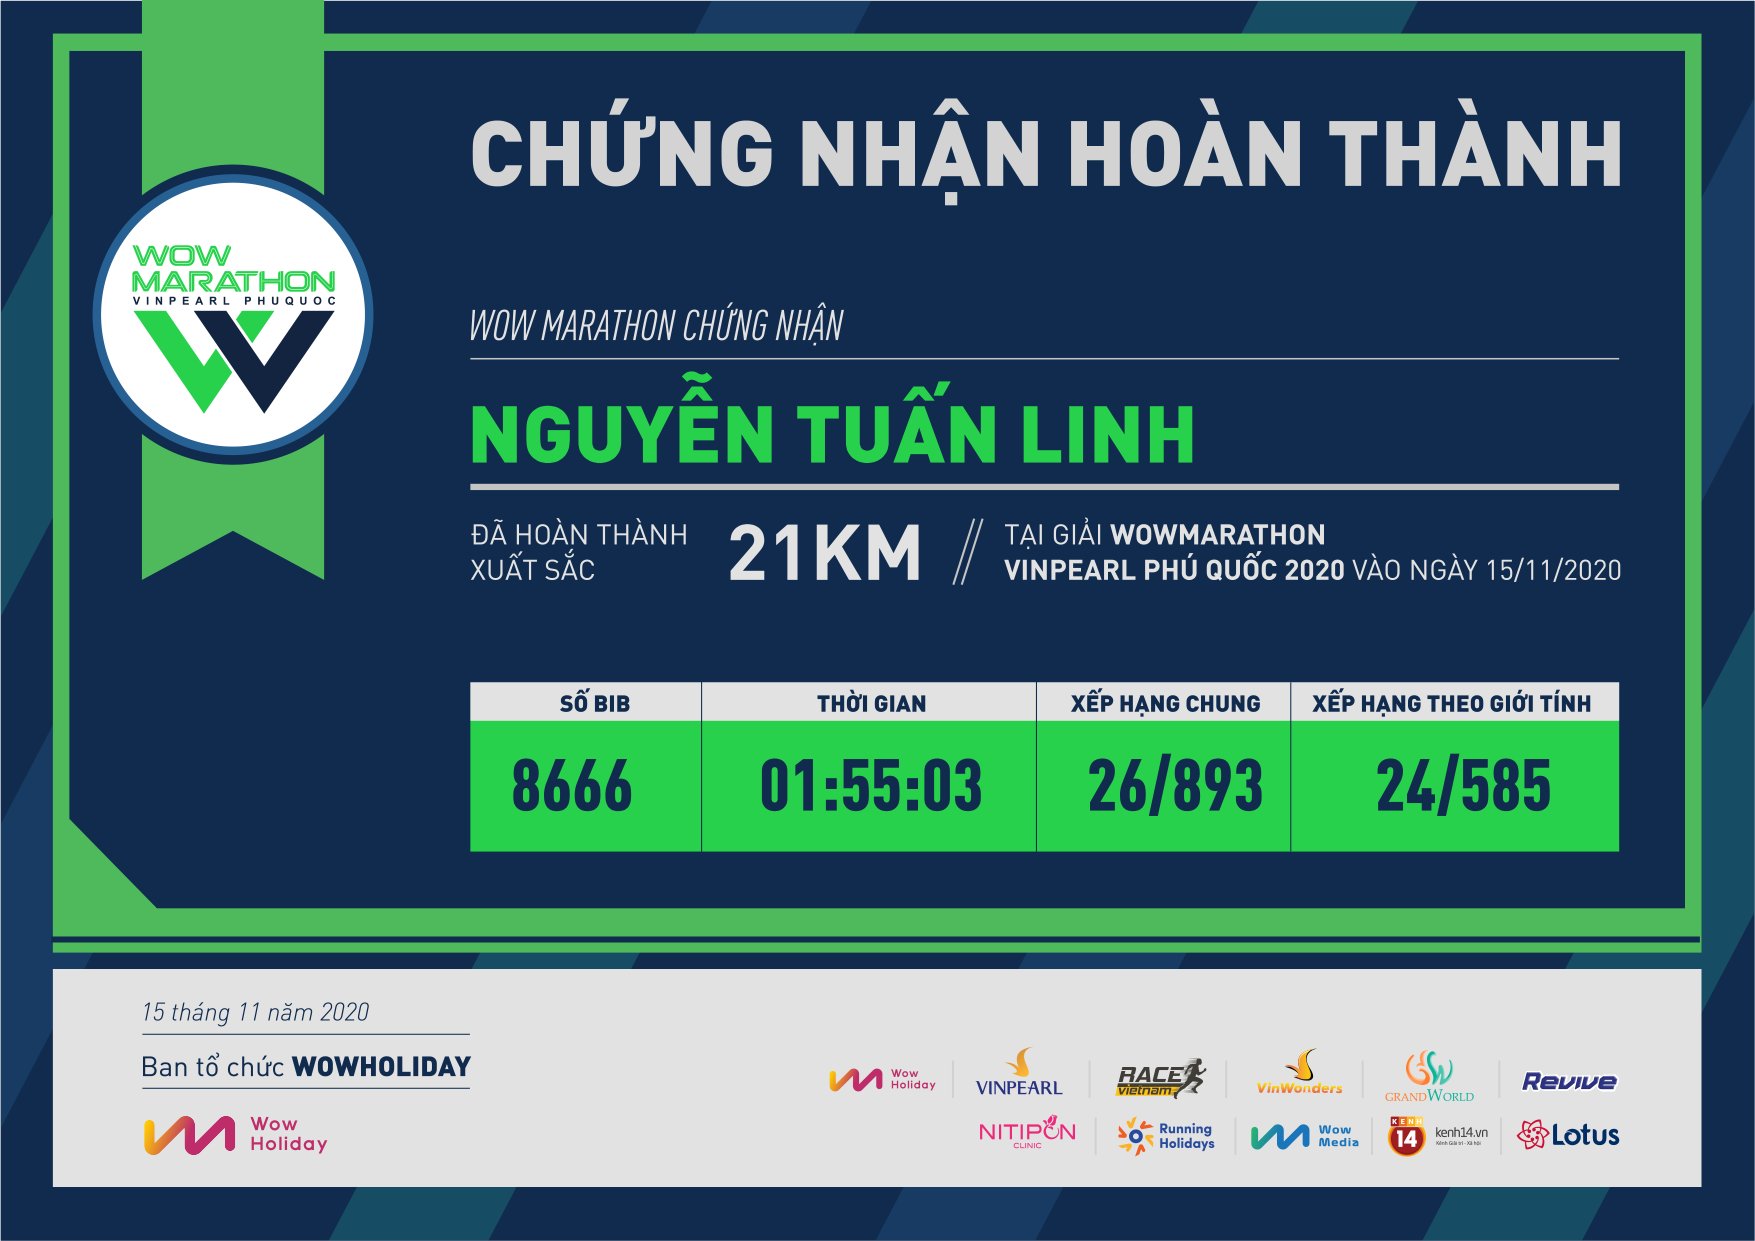 8666 - Nguyễn Tuấn Linh